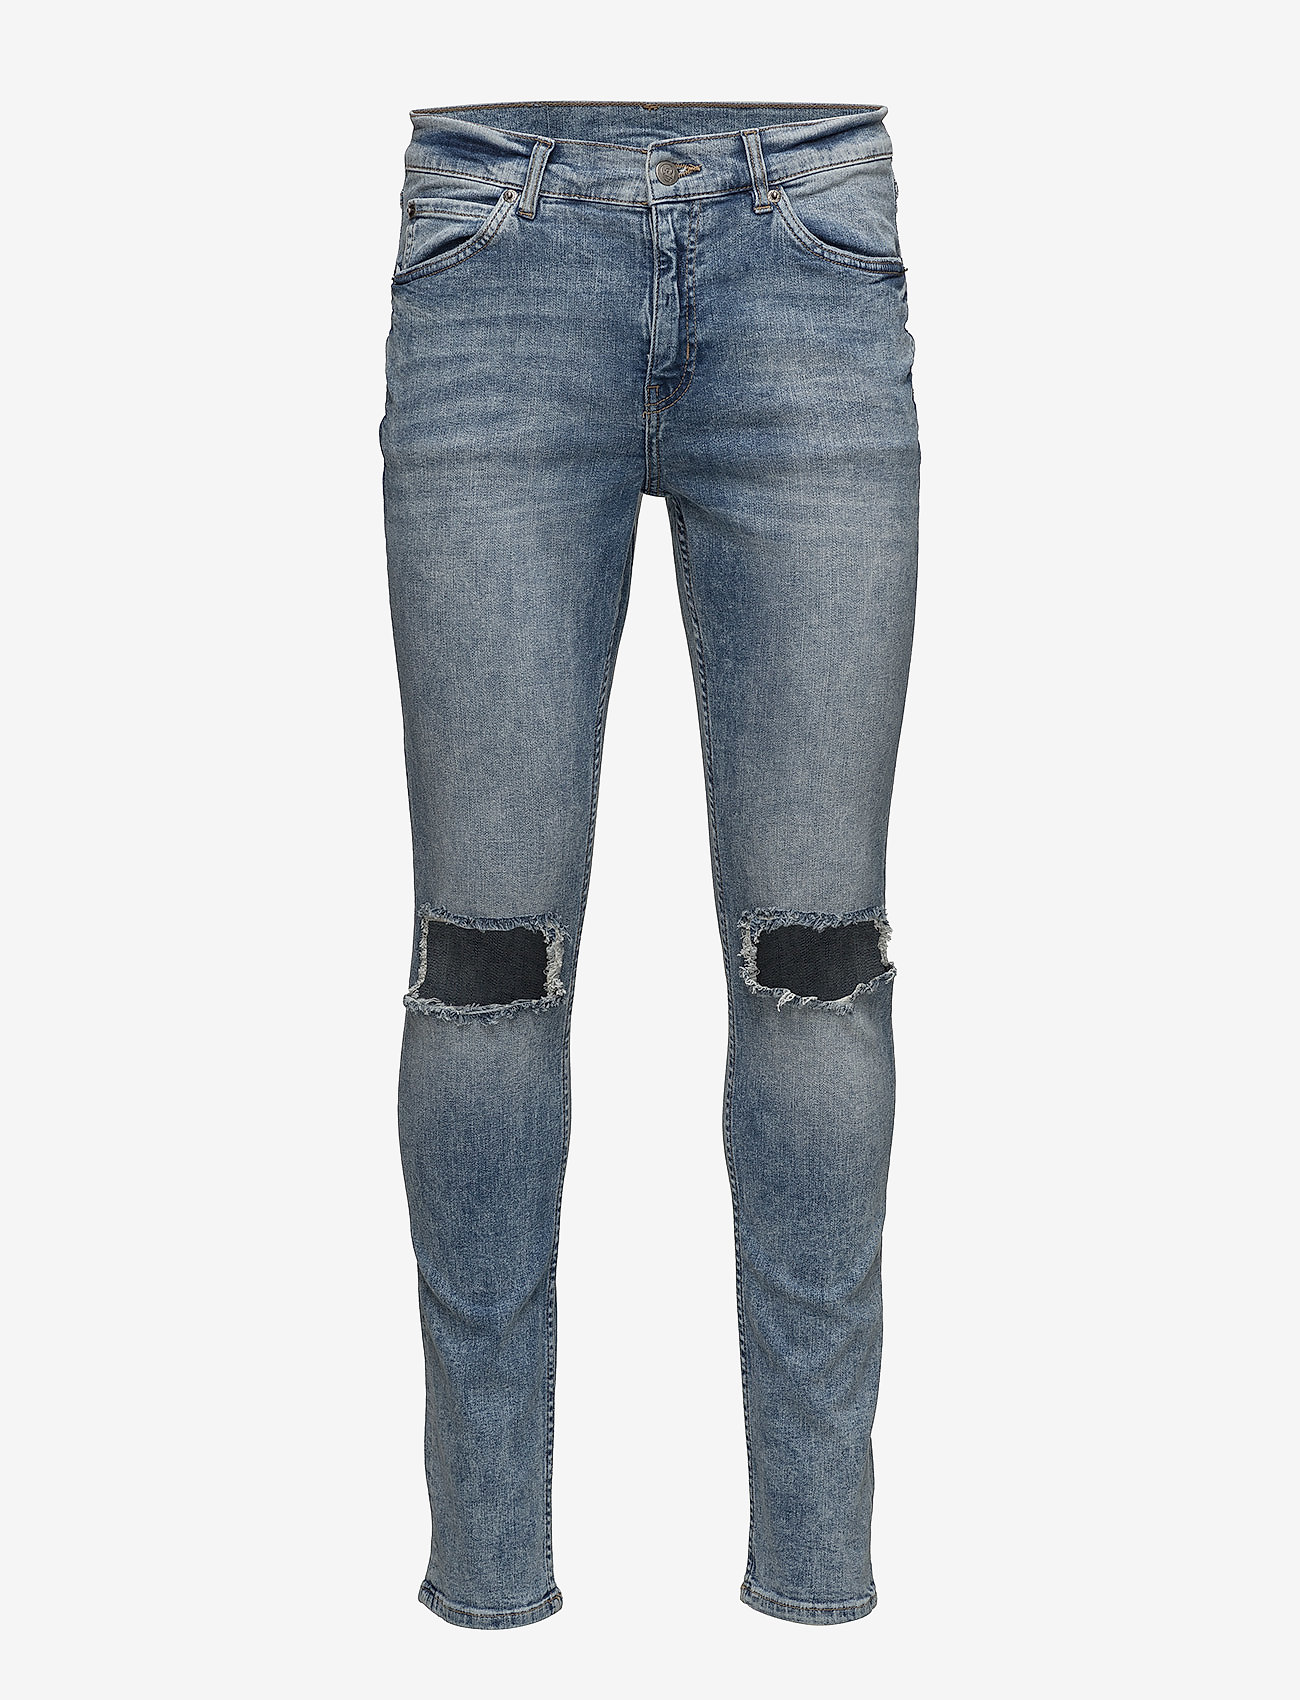 Cheap Monday - Tight Shift Blue - skinny jeans - blue - 0